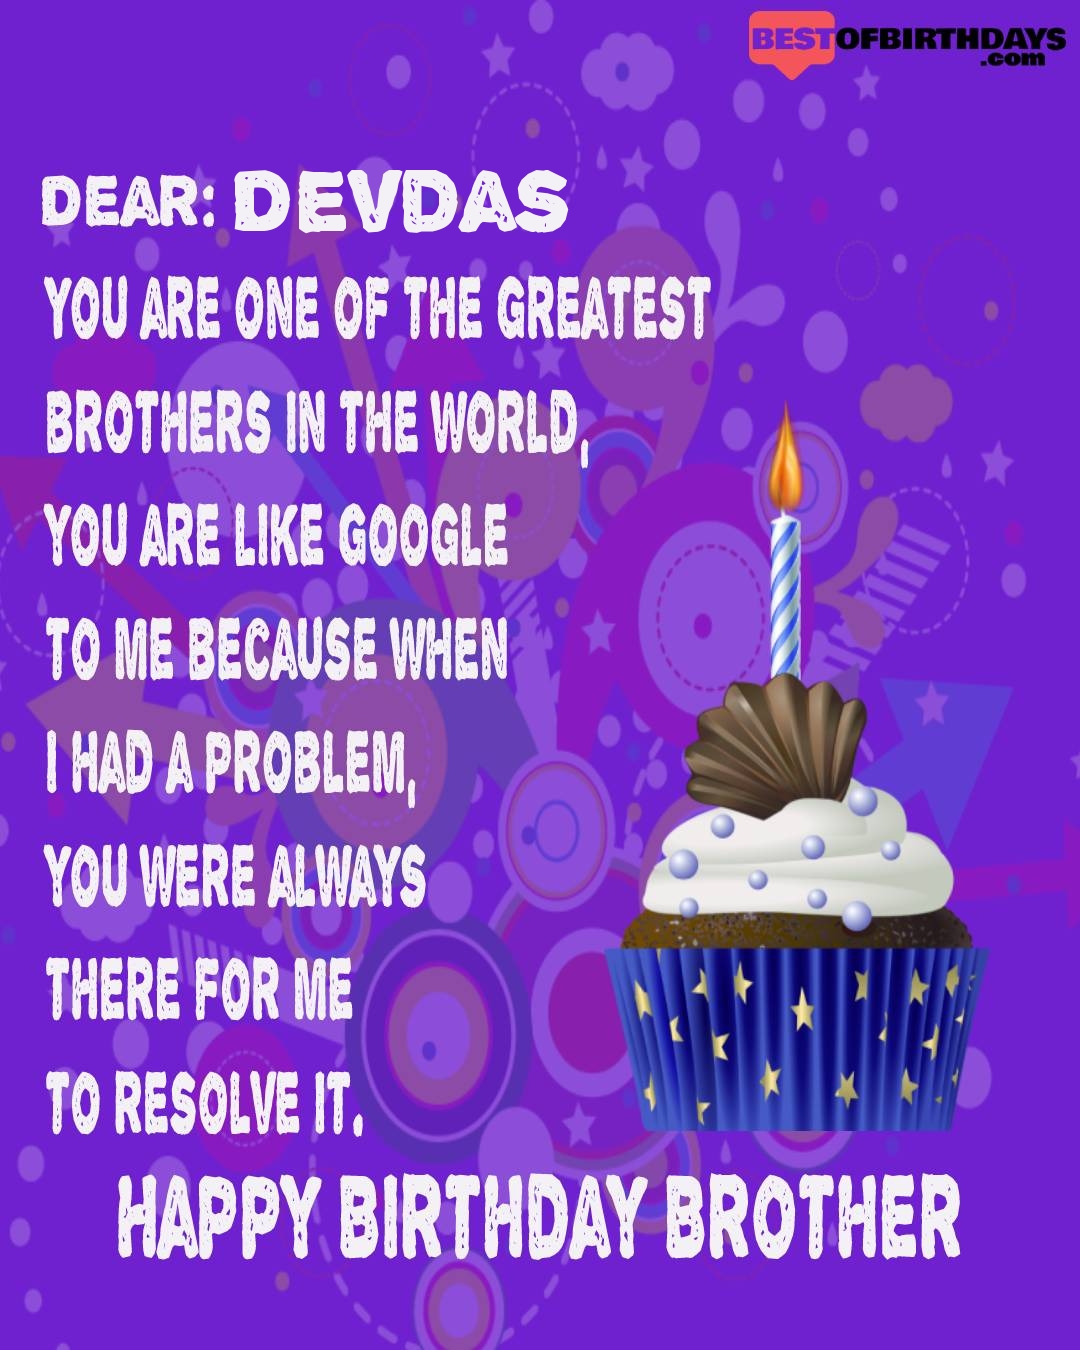 Happy birthday devdas bhai brother bro